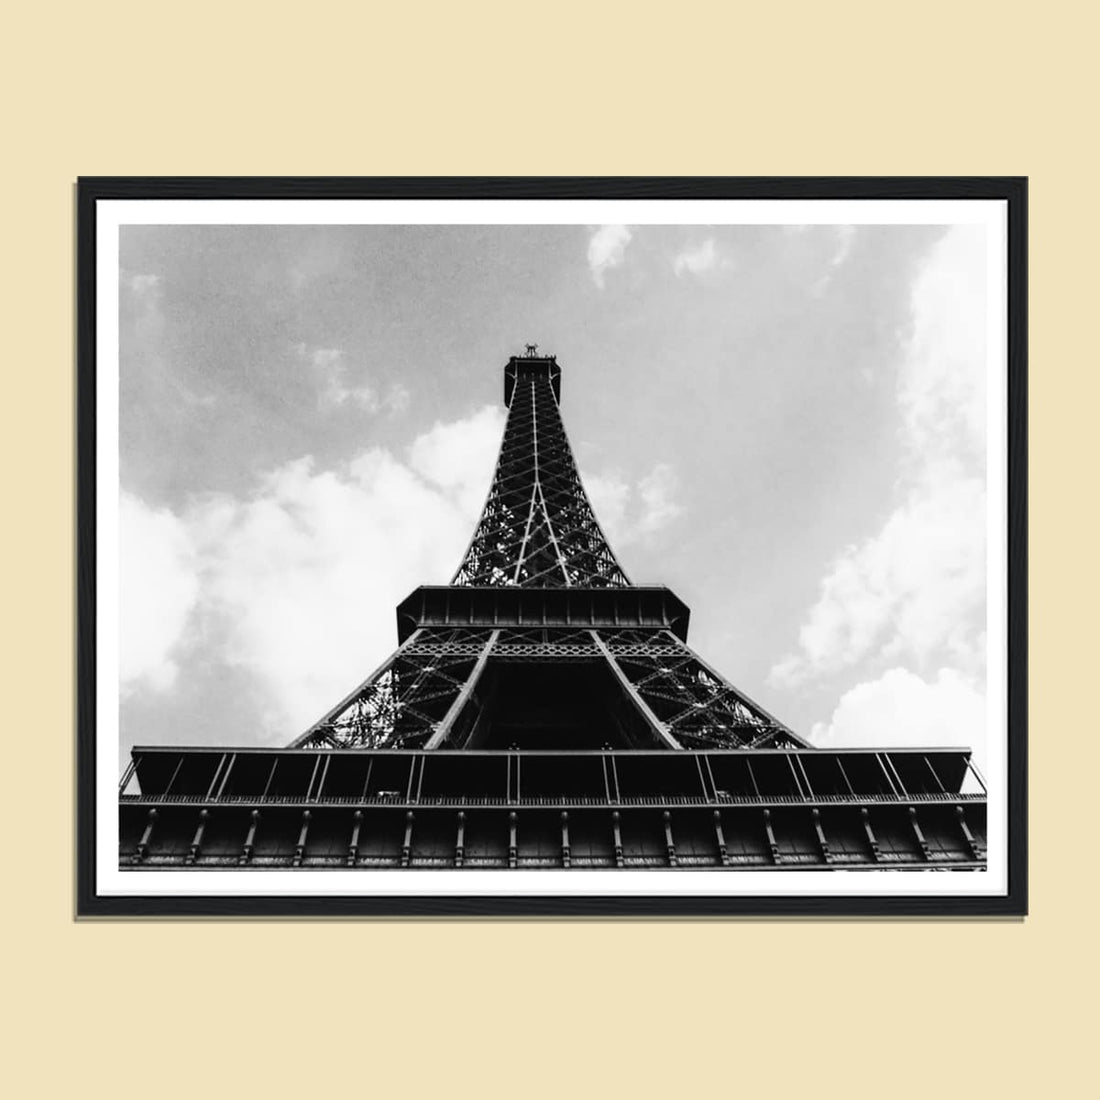 Poster-Set: Paris in Love V